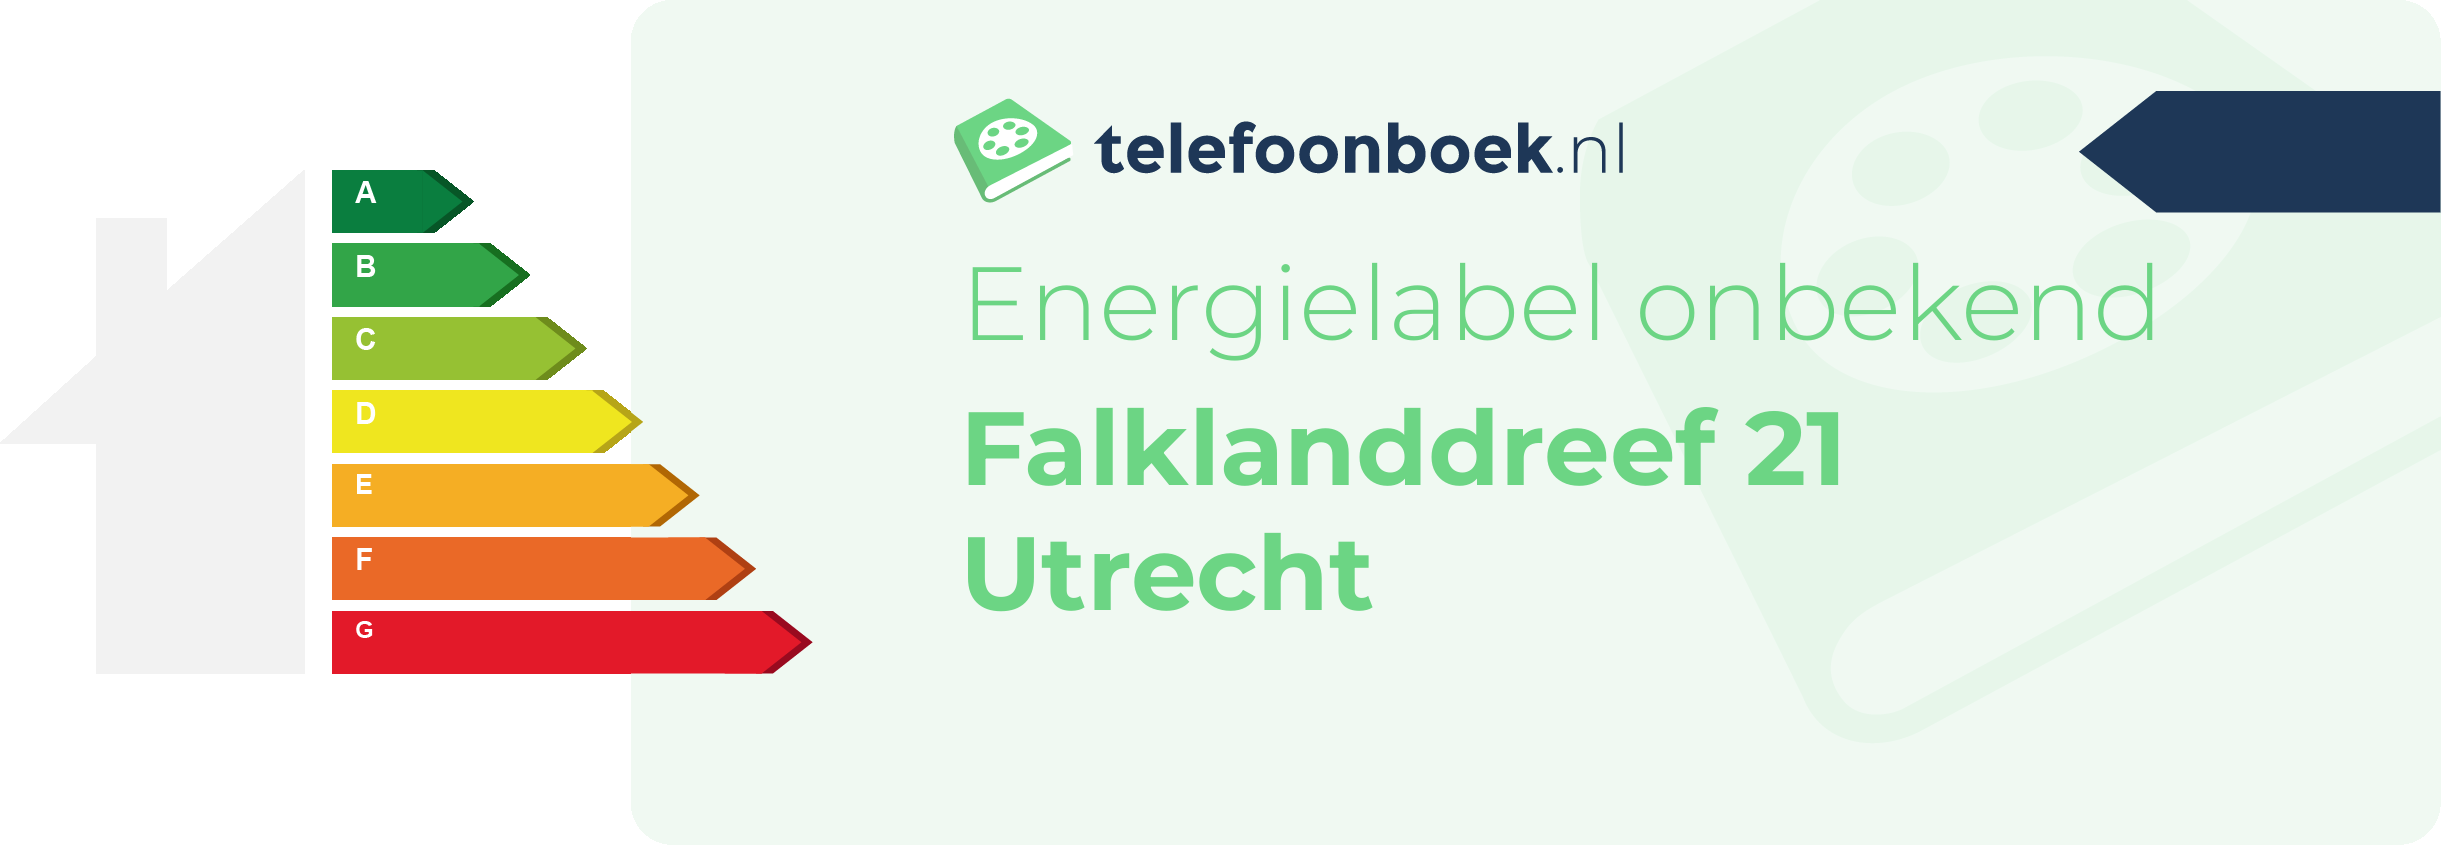 Energielabel Falklanddreef 21 Utrecht